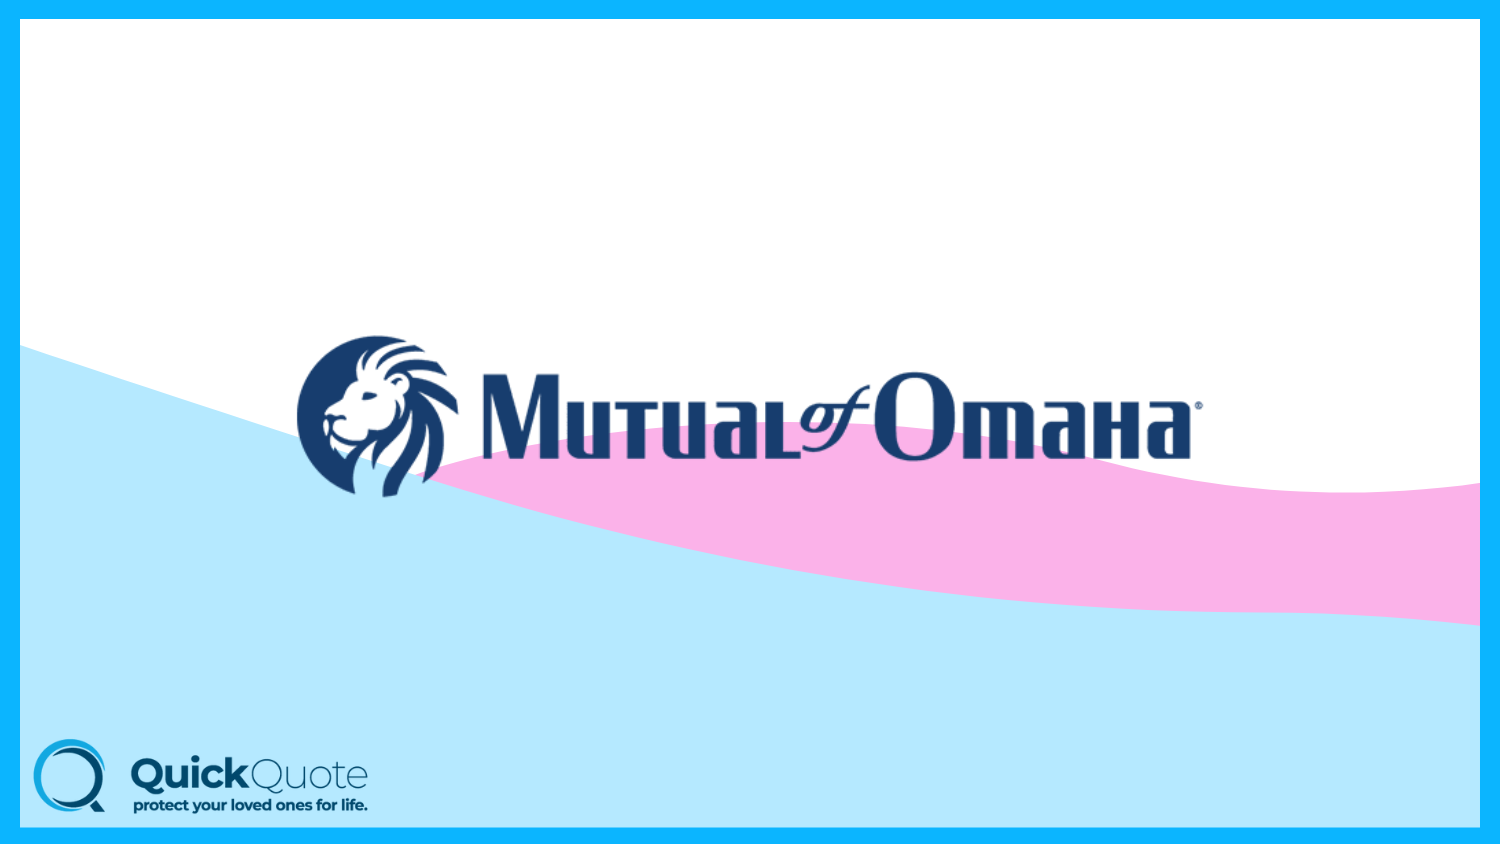 Mutual of Omaha: Best Life Insurance for Marijuana Users